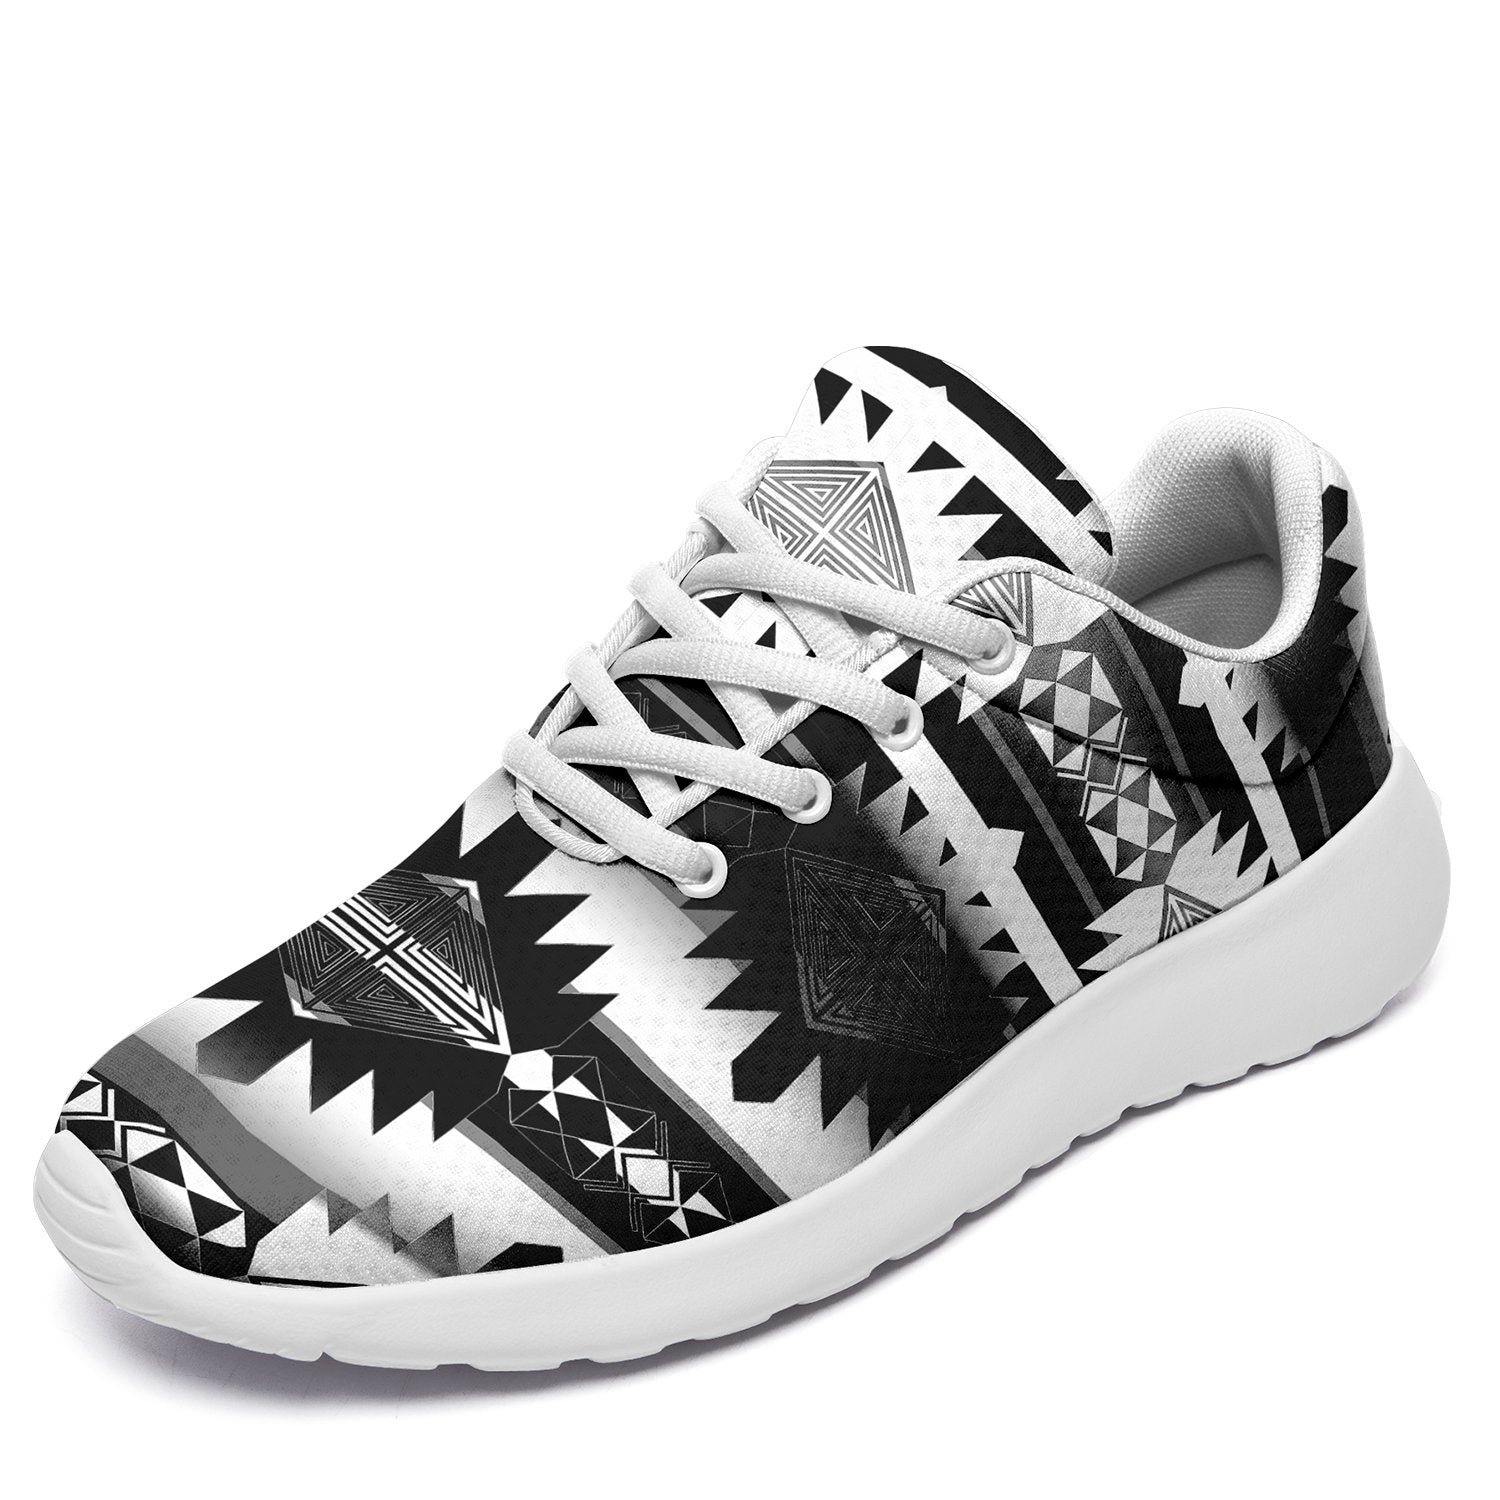 Okotoks Black and White Ikkaayi Sport Sneakers 49 Dzine US Women 4.5 / US Youth 3.5 / EUR 35 White Sole 